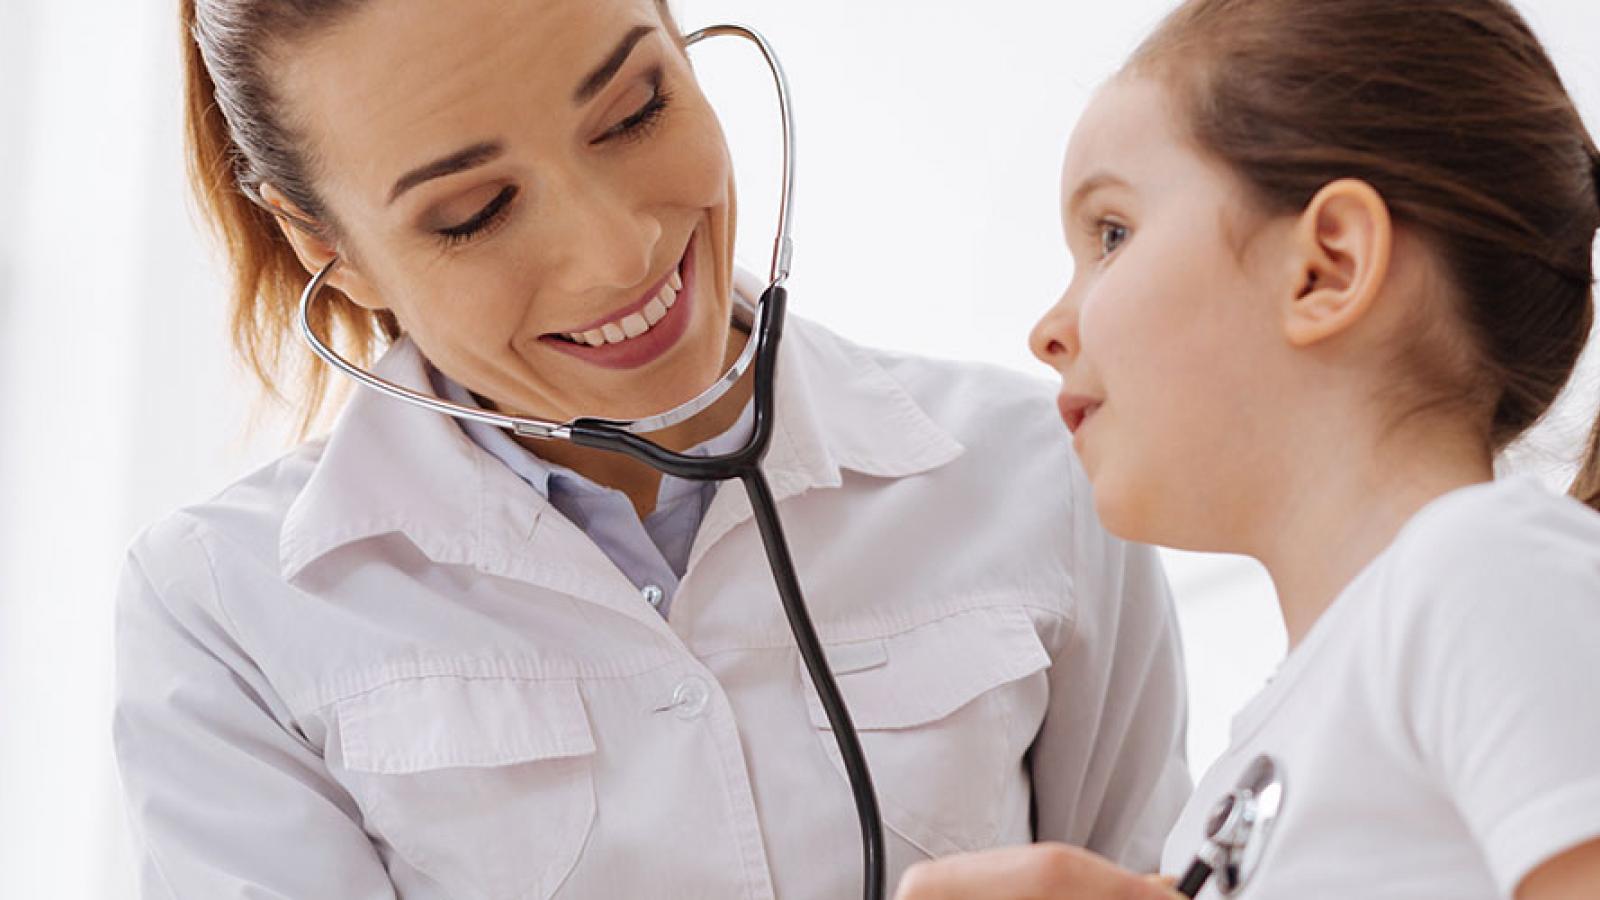 Doctor using stethoscope on child 